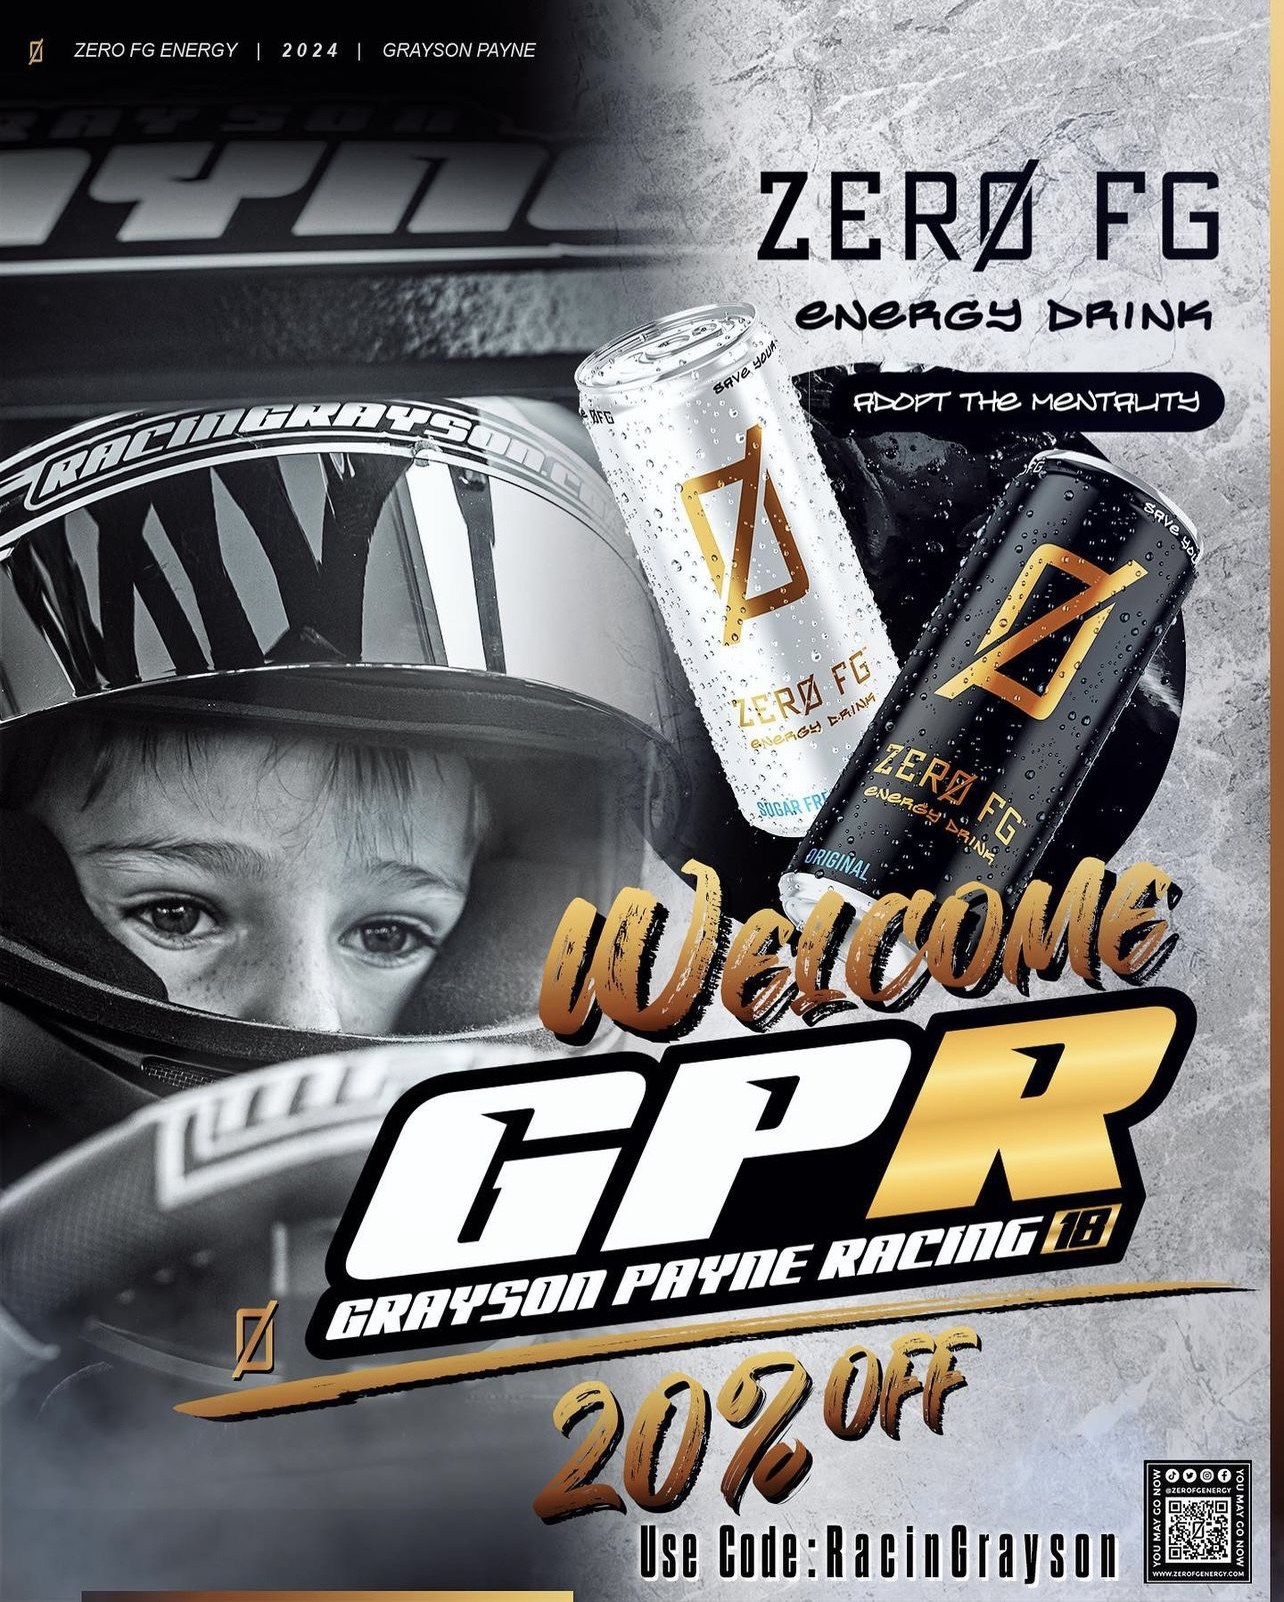 Zero Fg embarks on a youth racing sponsorship with Jr Honda Driver, grayson Payne